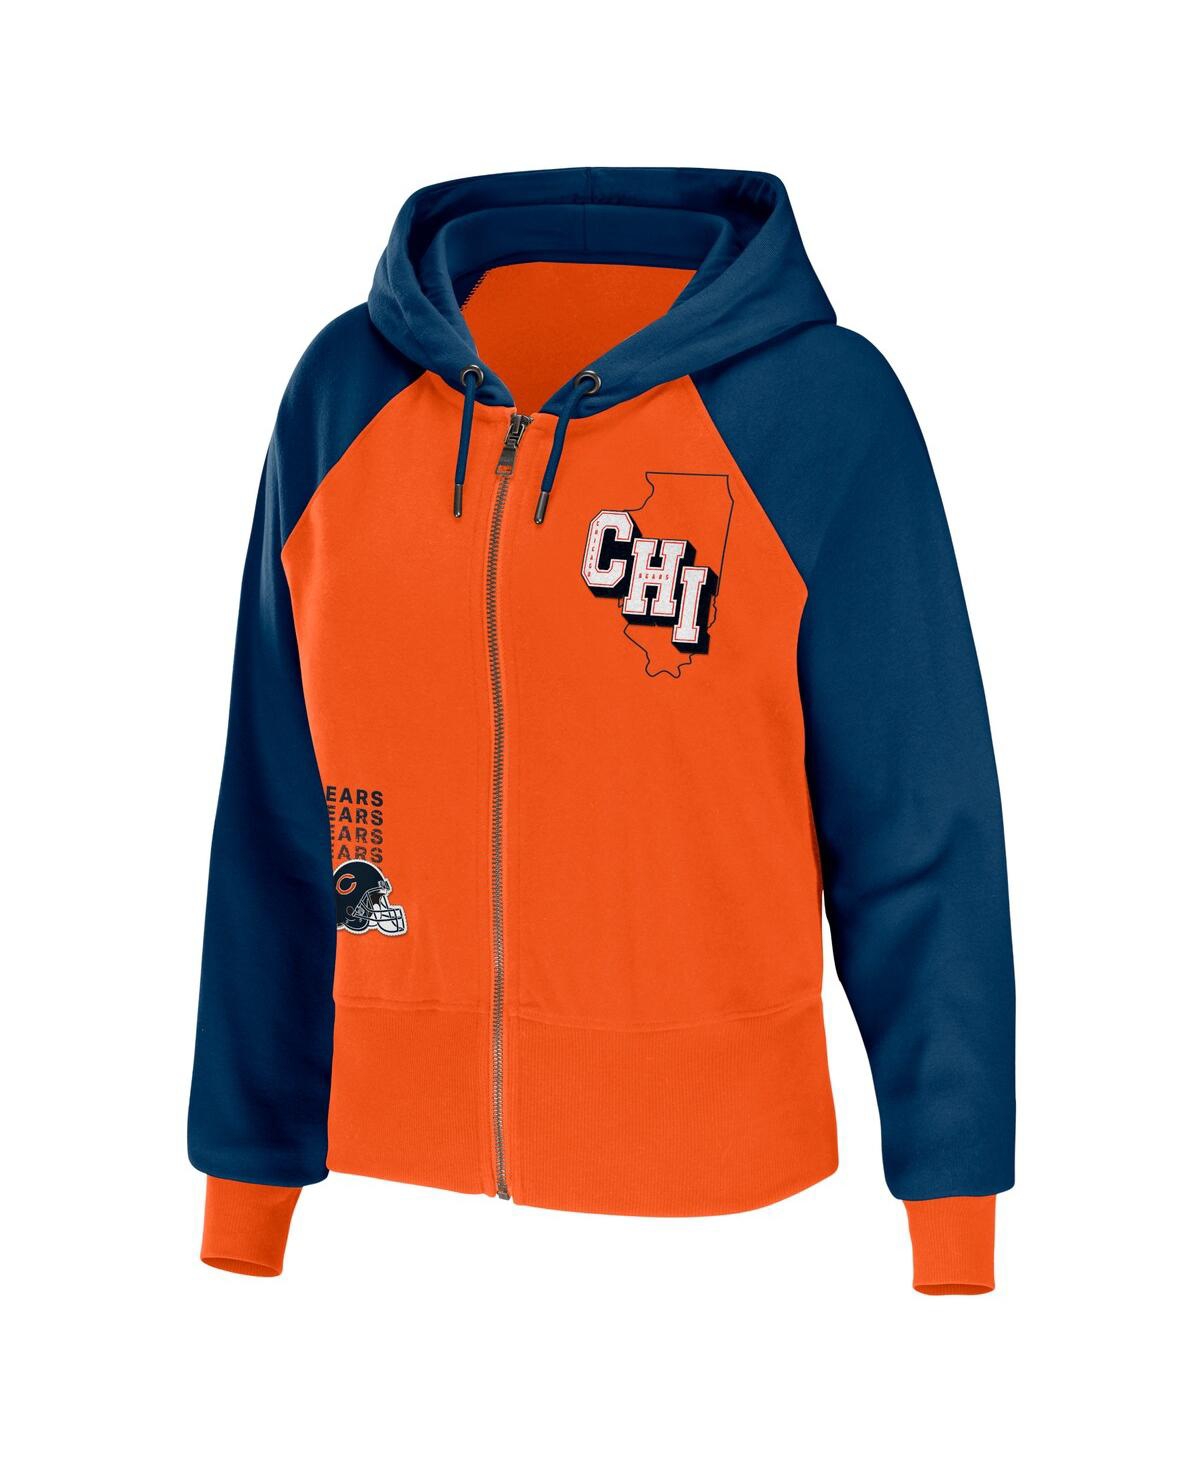 Shop Wear By Erin Andrews Women's  Orange Chicago Bears Colorblock Full-zip Hoodie